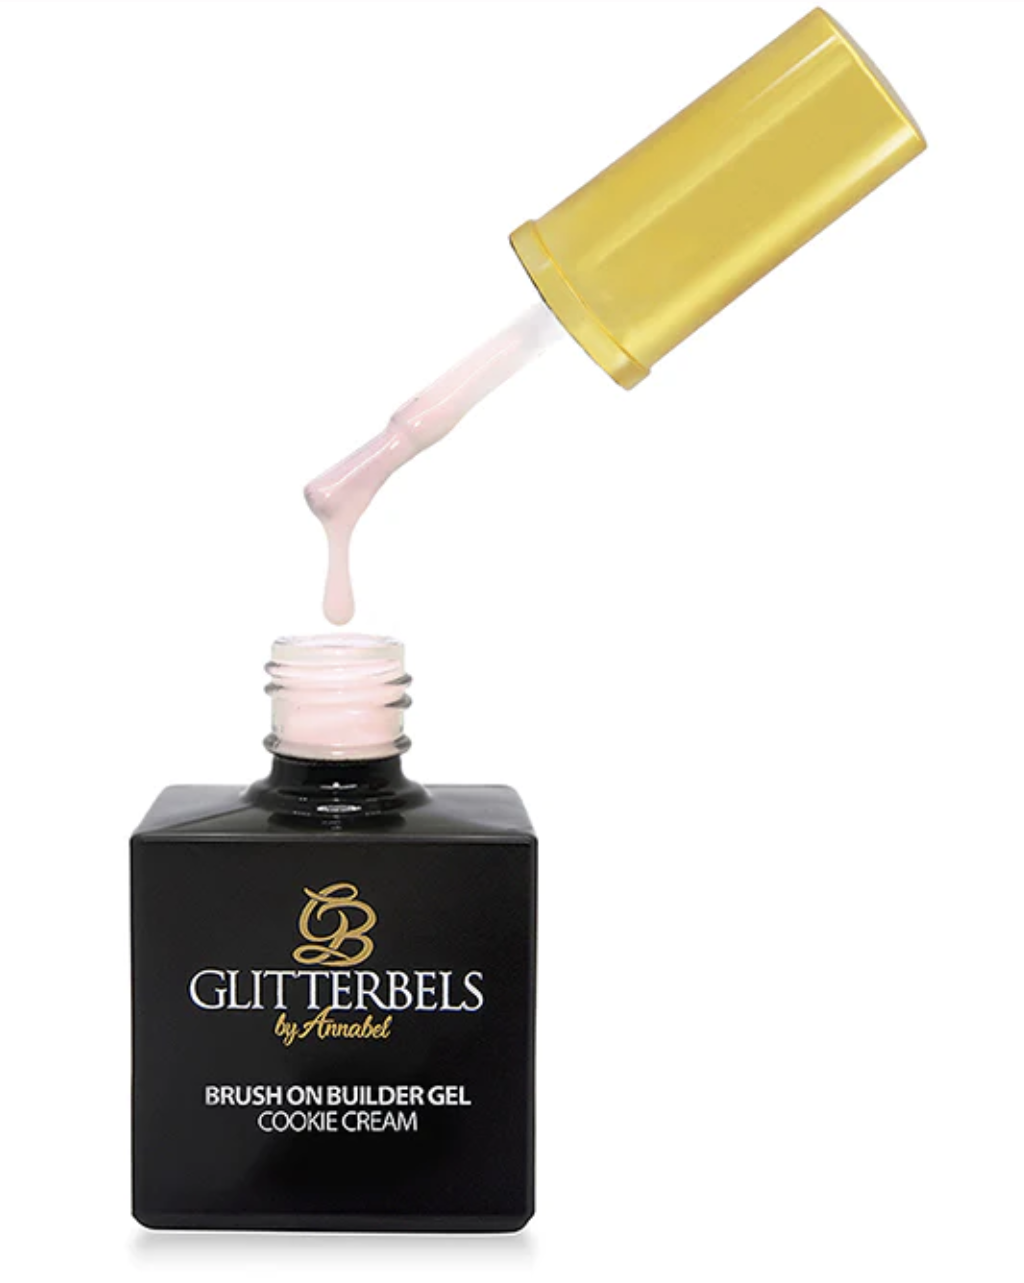 Glitterbels Brush-on Builder Gel Cookie Cream